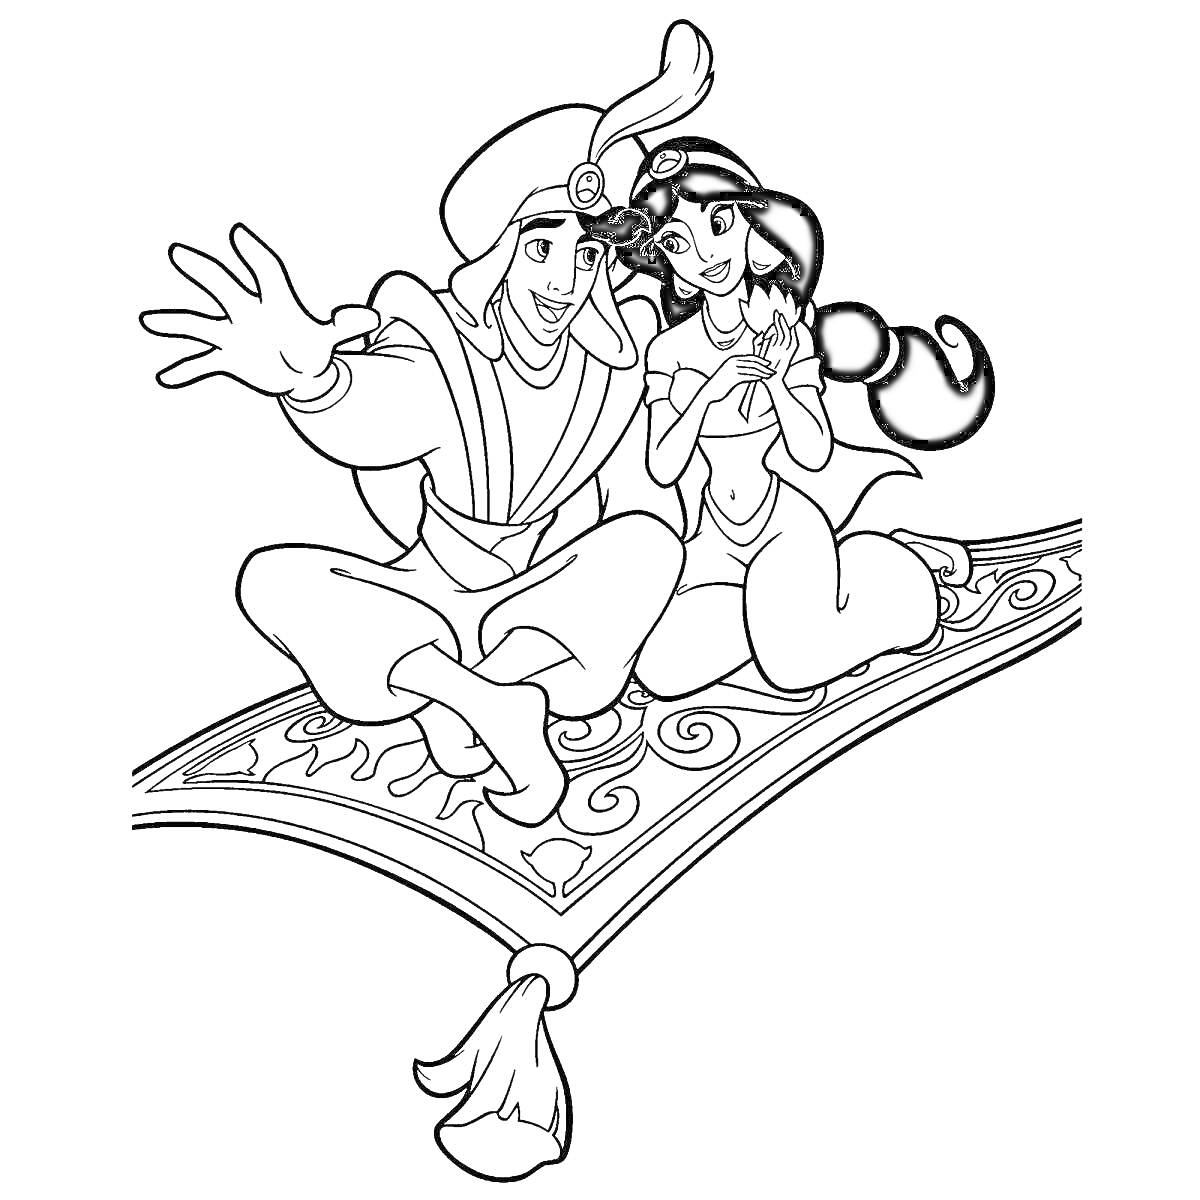 Раскраска Алладин и принцесса Жасмин на волшебном ковре-самолете